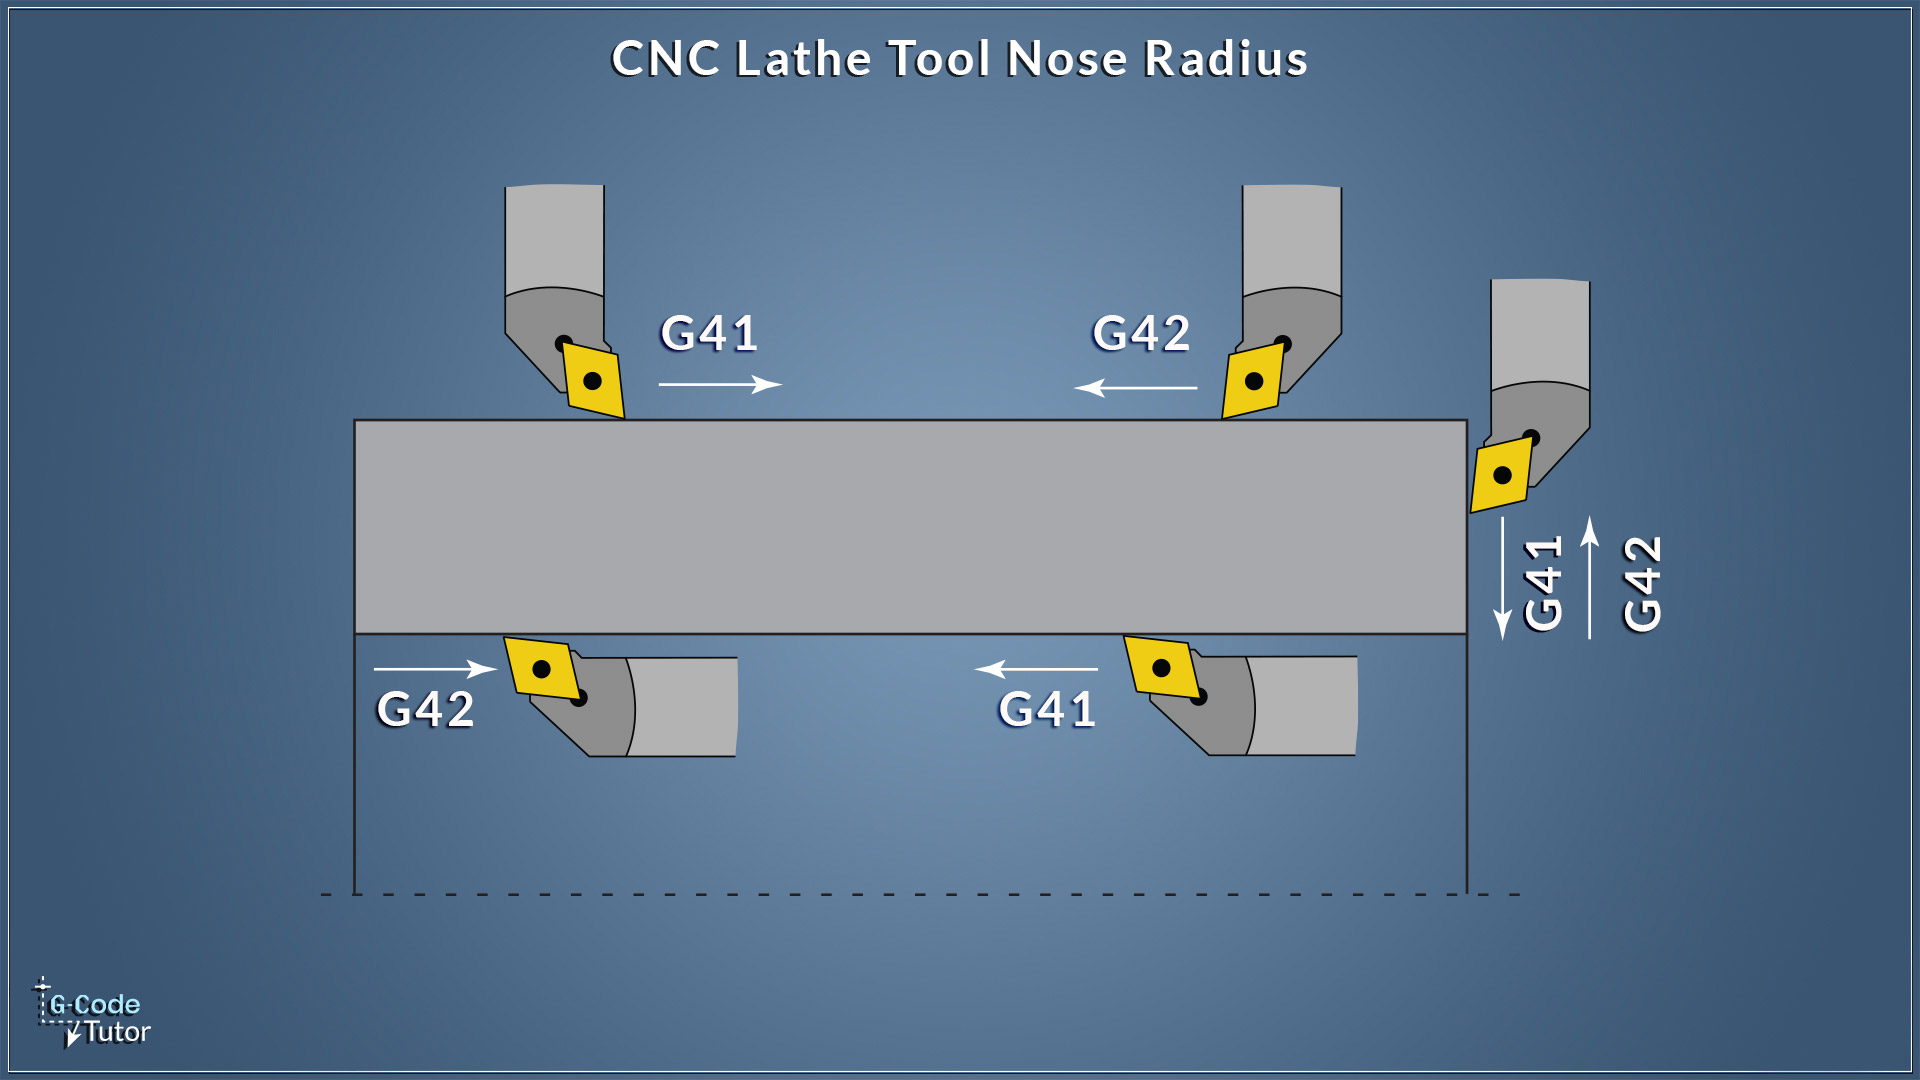 Tool nose radius compensation on a CNC Lathe